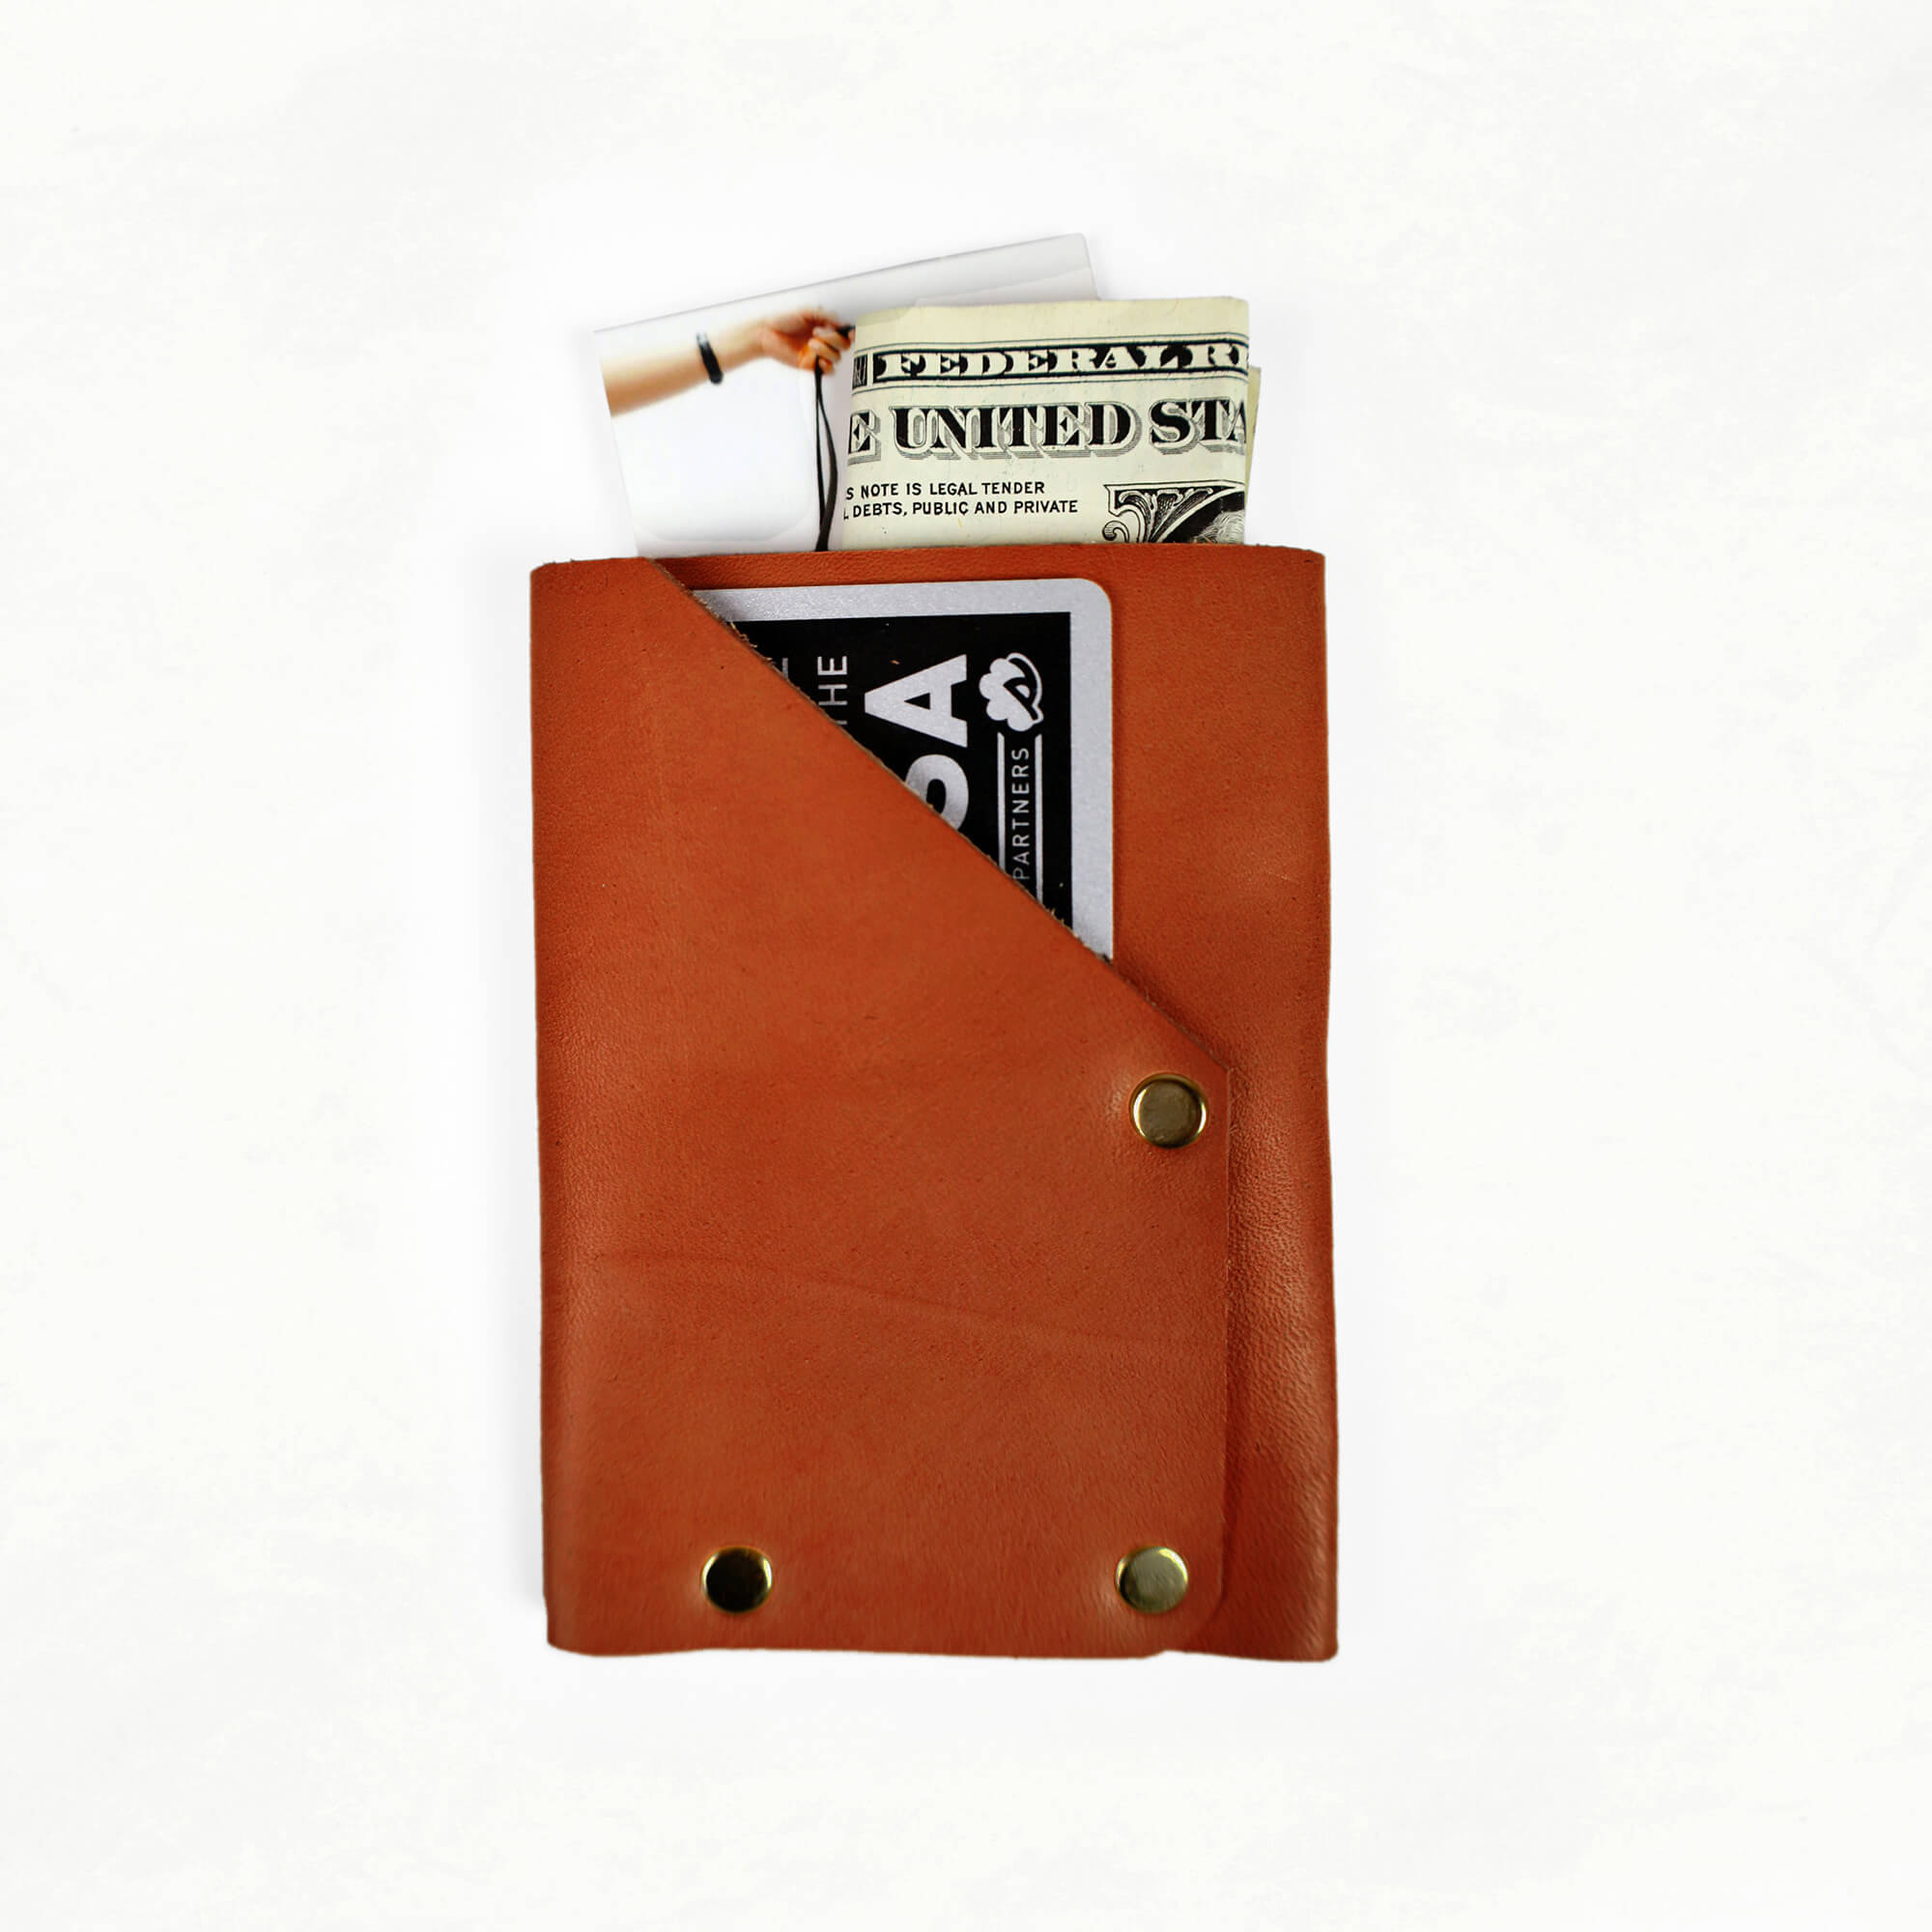 Minimalism Leather Card Holder Kit DIY Black Leather Coin Wallet Kit DIY  Leather Projects DIY Leather Kit